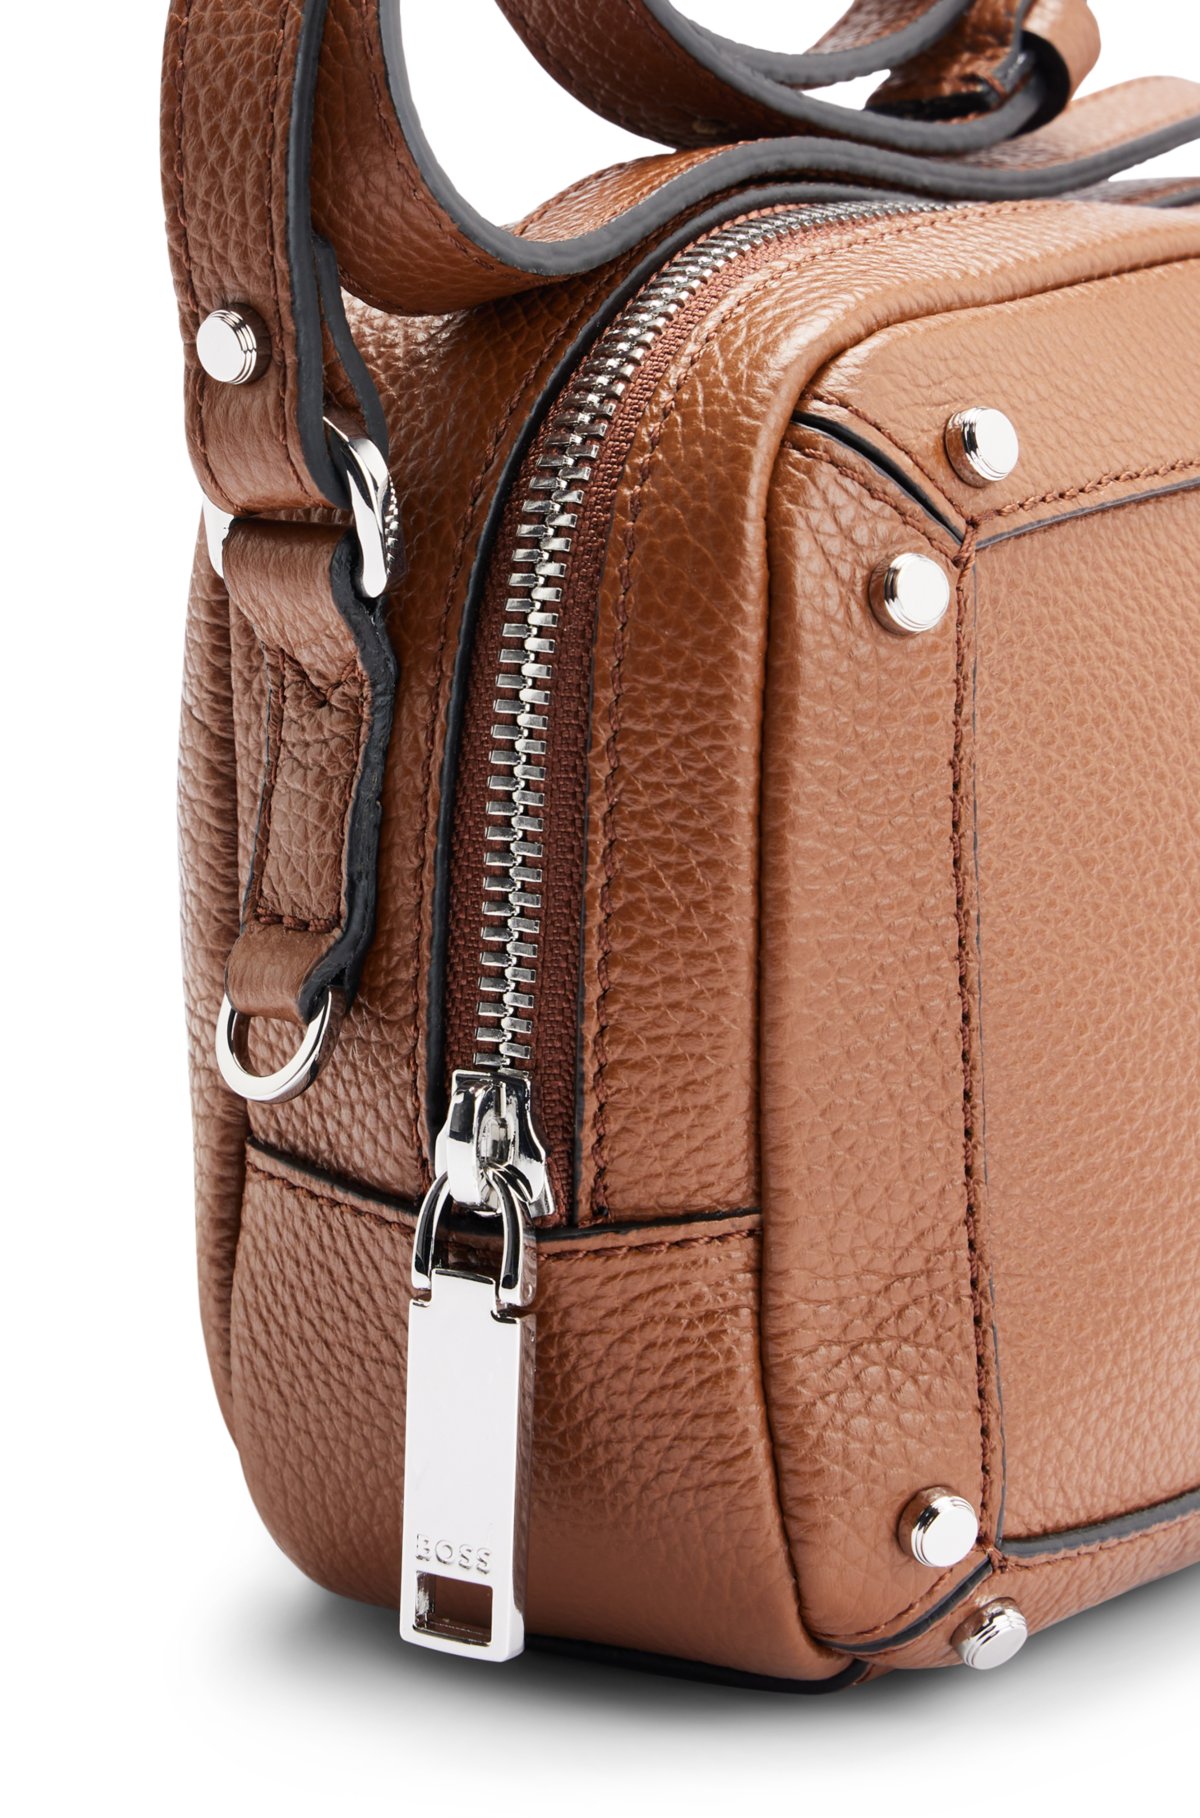 Joli authentique grand sac à main HUGO BOSS cuir vintage bag /